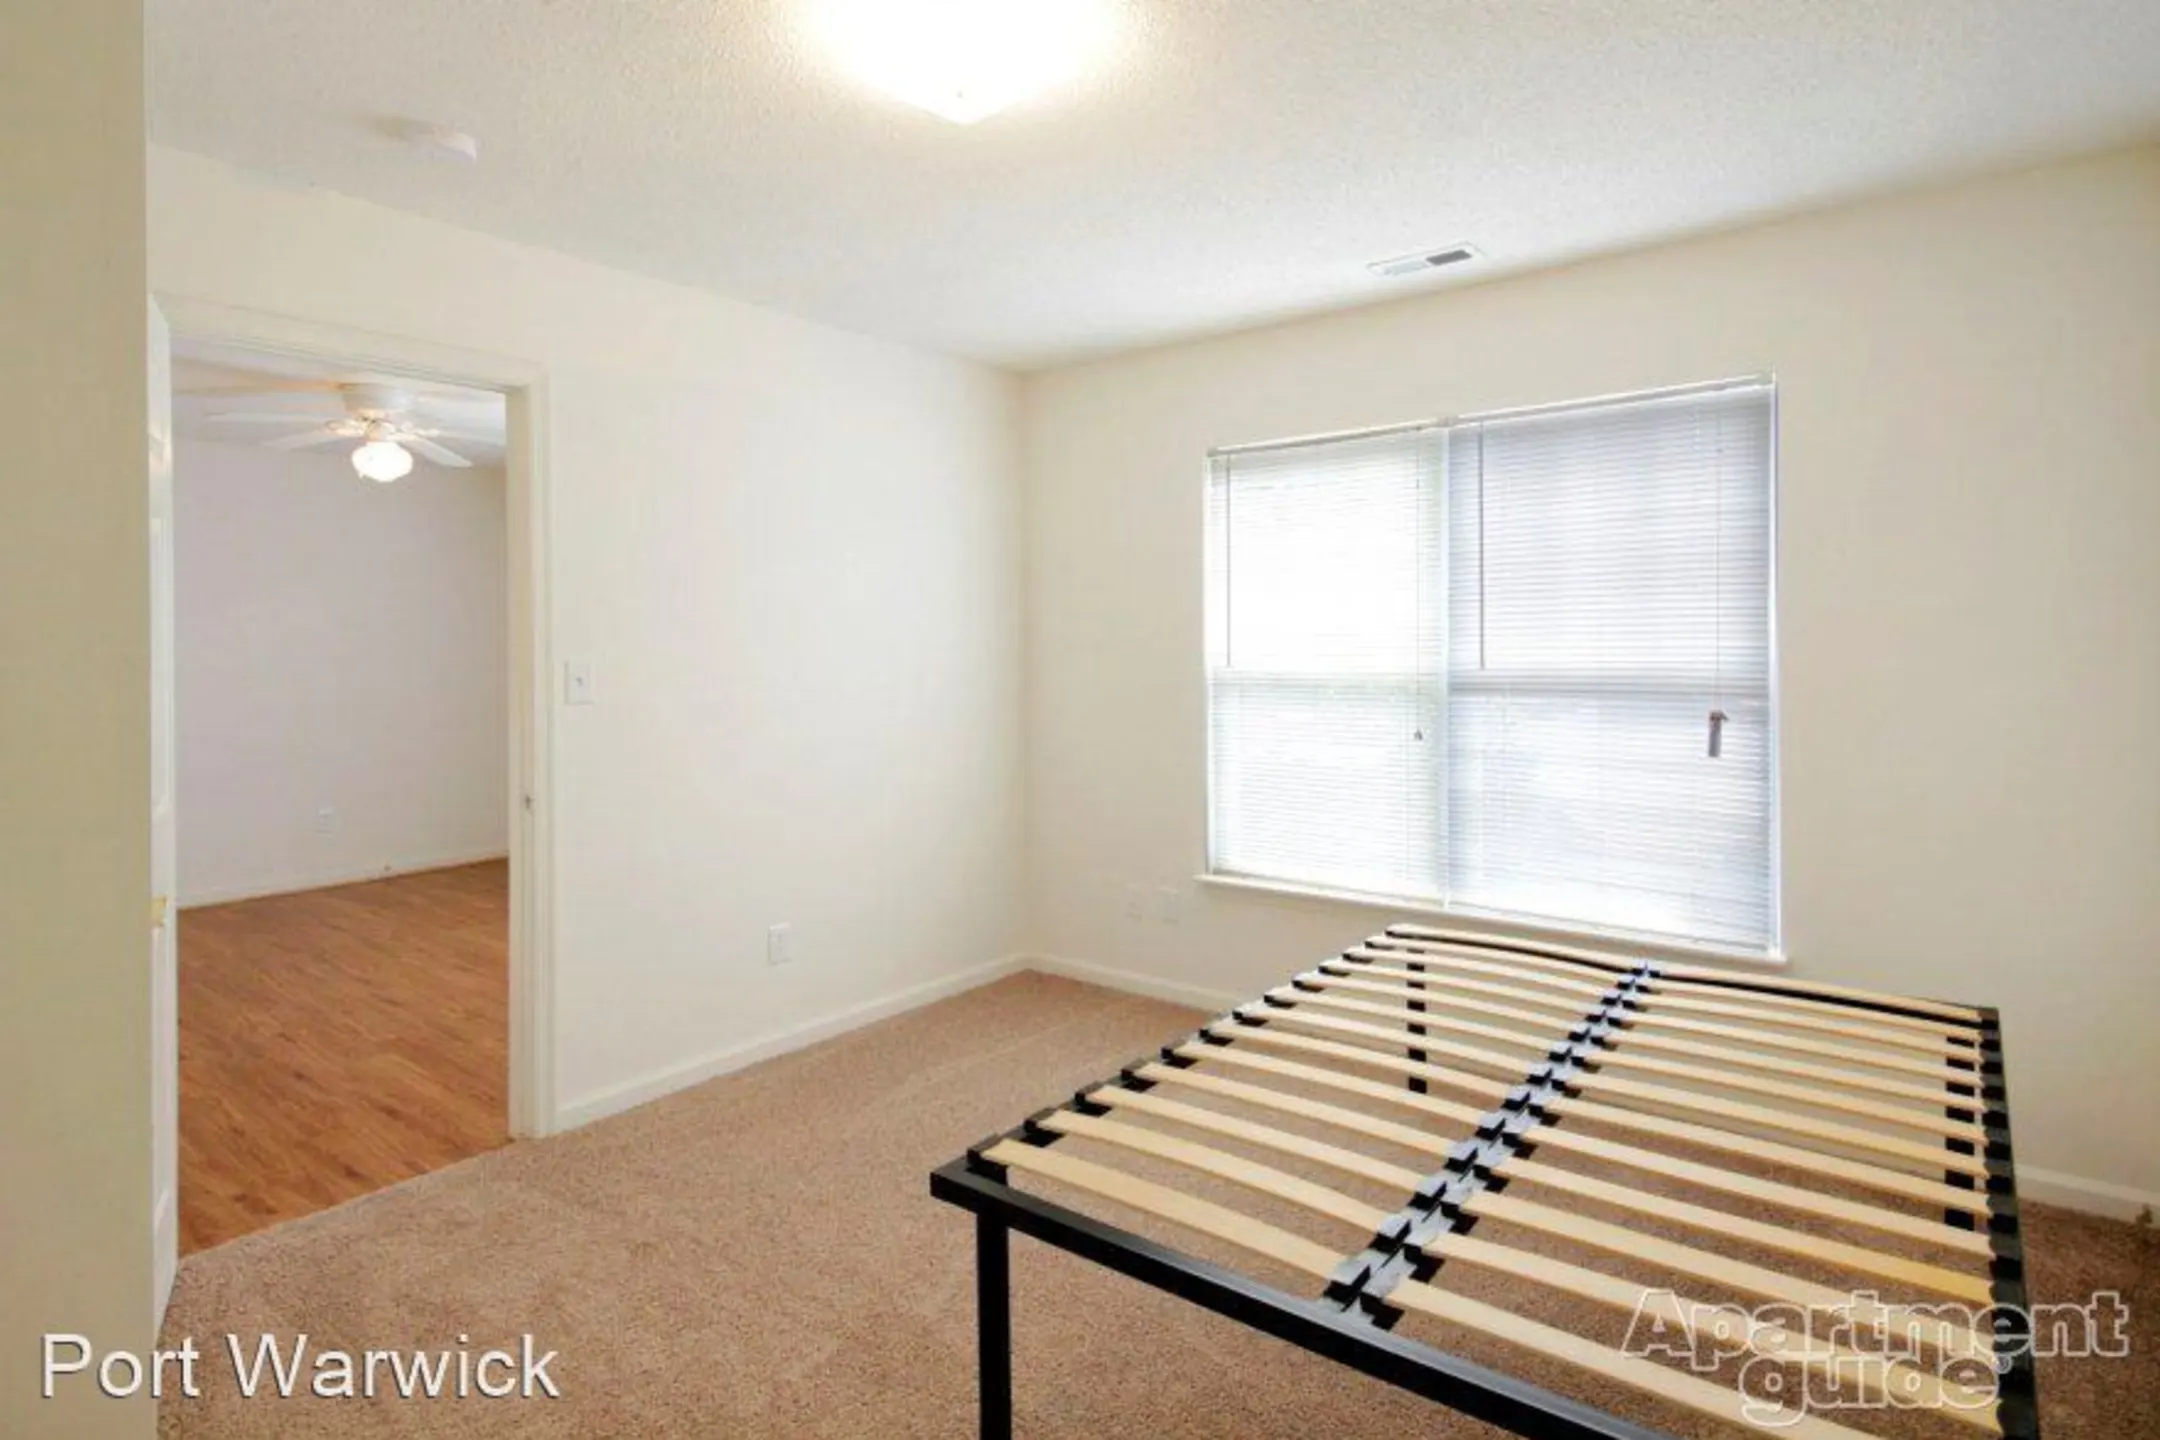 Bedroom - The Suites at Port Warwick - Newport News, VA